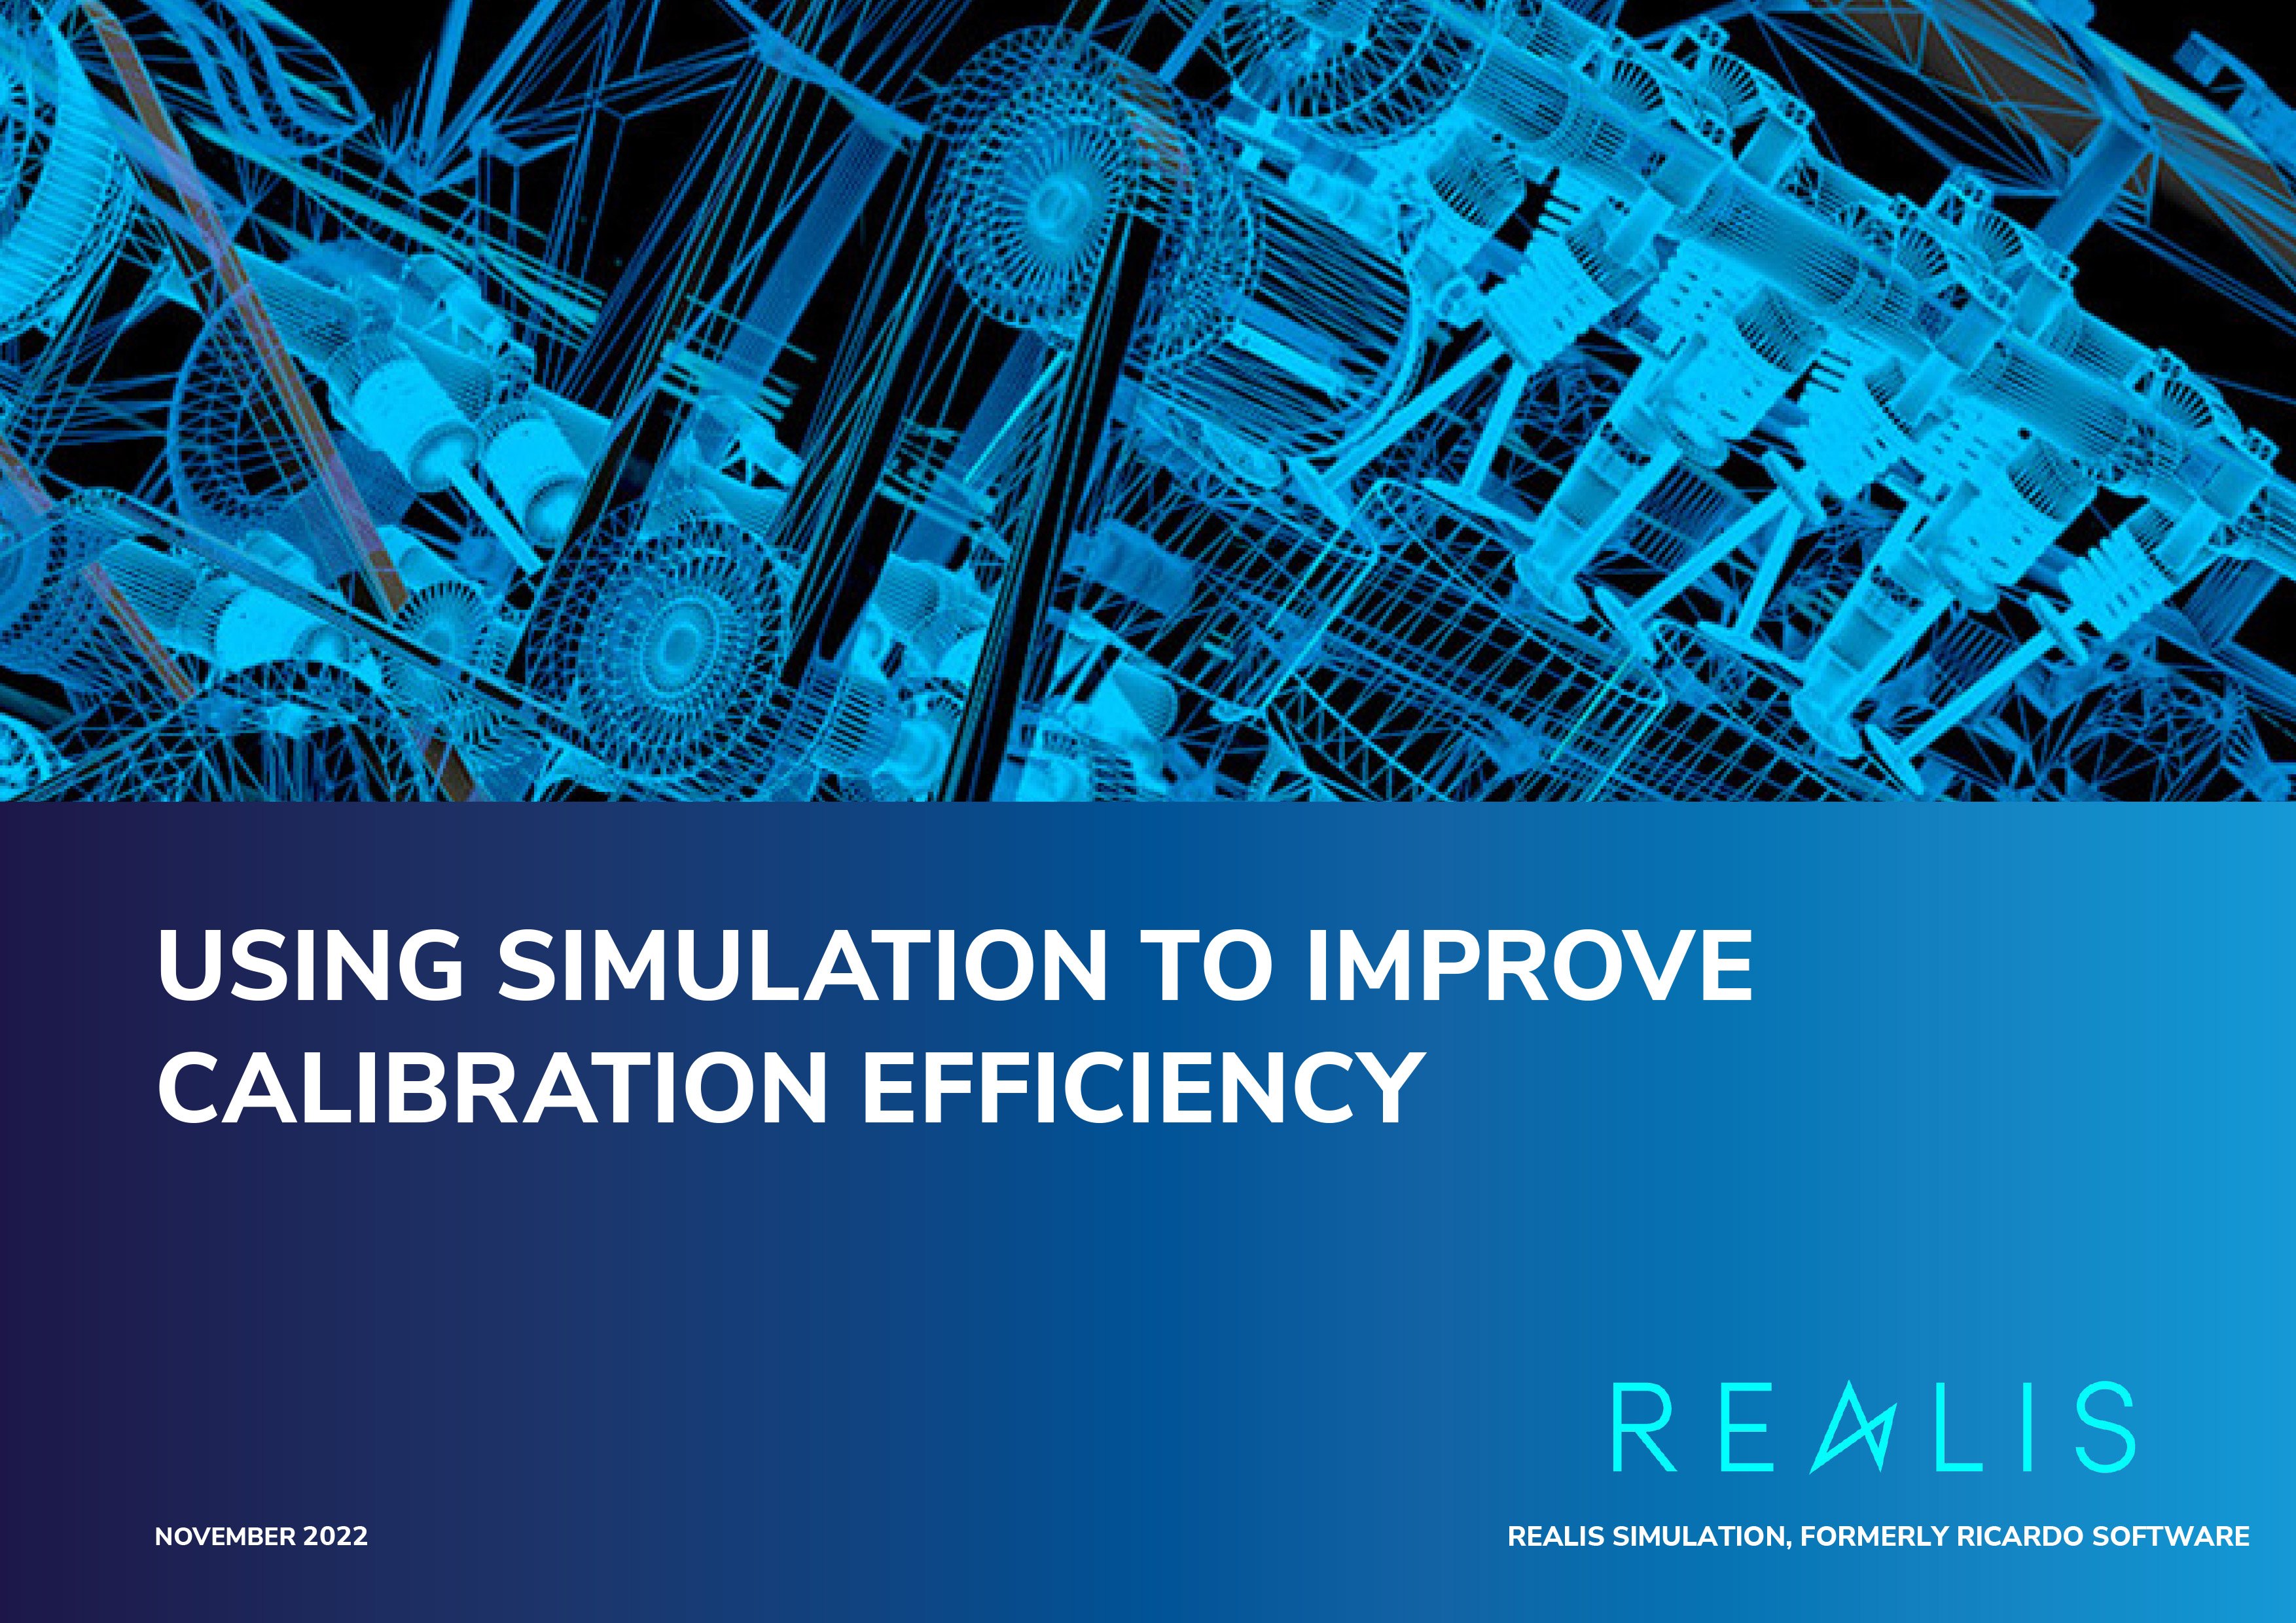 Using simulation to improve calibration efficiency